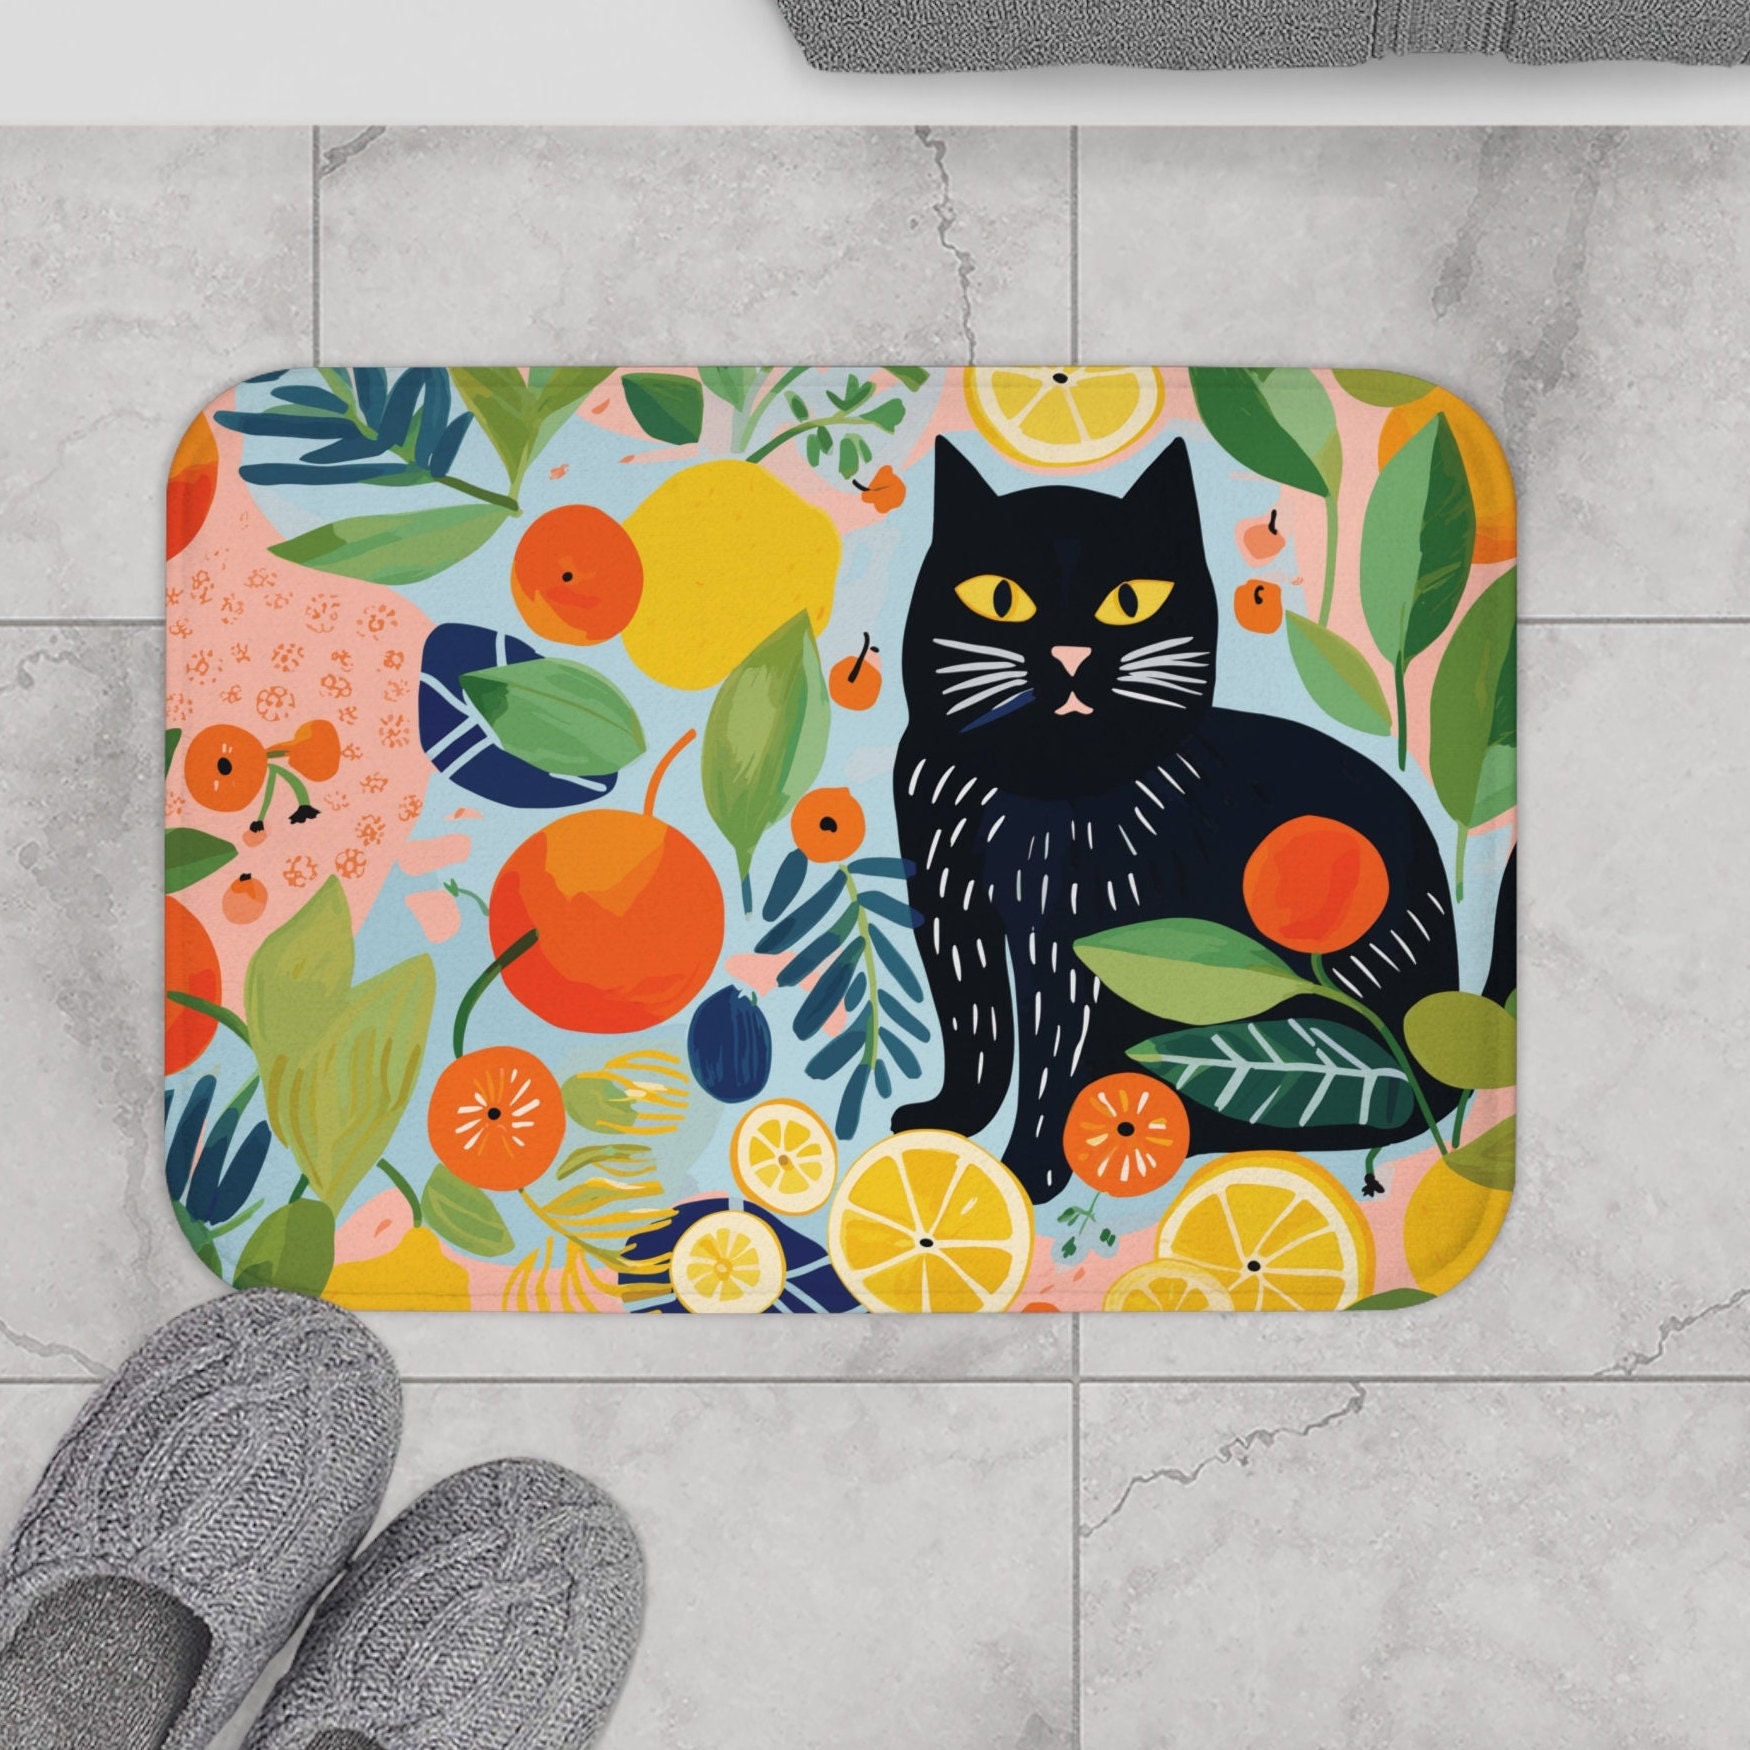 NIGOWAYS Cat Doormat - Cat Welcome Mat,Cute and Soft Cat Rug,Black Cat Bath  Mats for Bathroom, Bedroom,Non Slip Washable Rug (31 * 28 Inch)